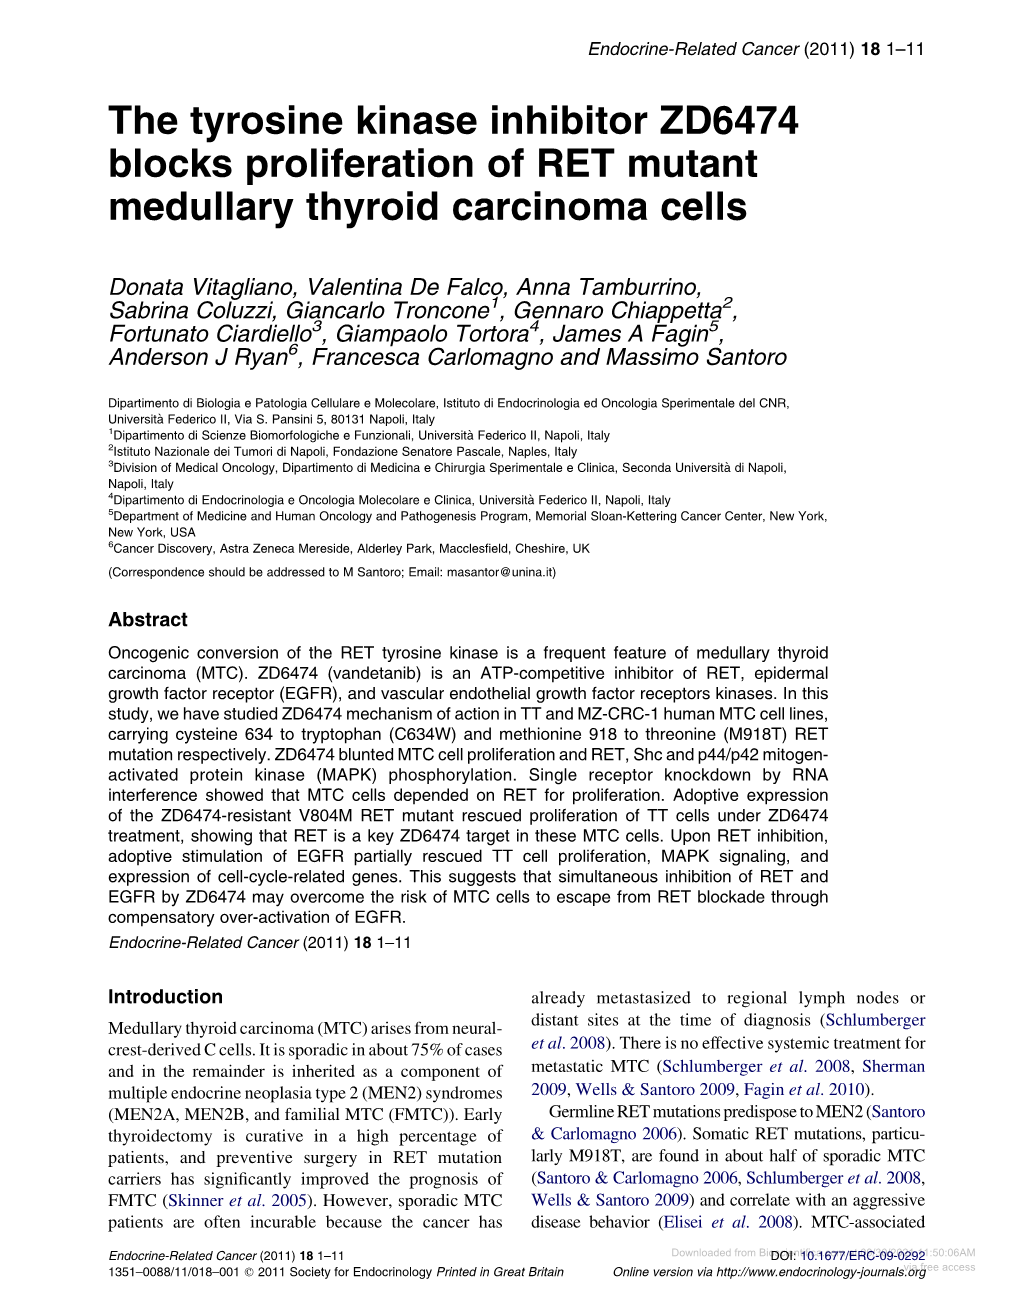 The Tyrosine Kinase Inhibitor ZD6474 Blocks Proliferation of RET Mutant Medullary Thyroid Carcinoma Cells